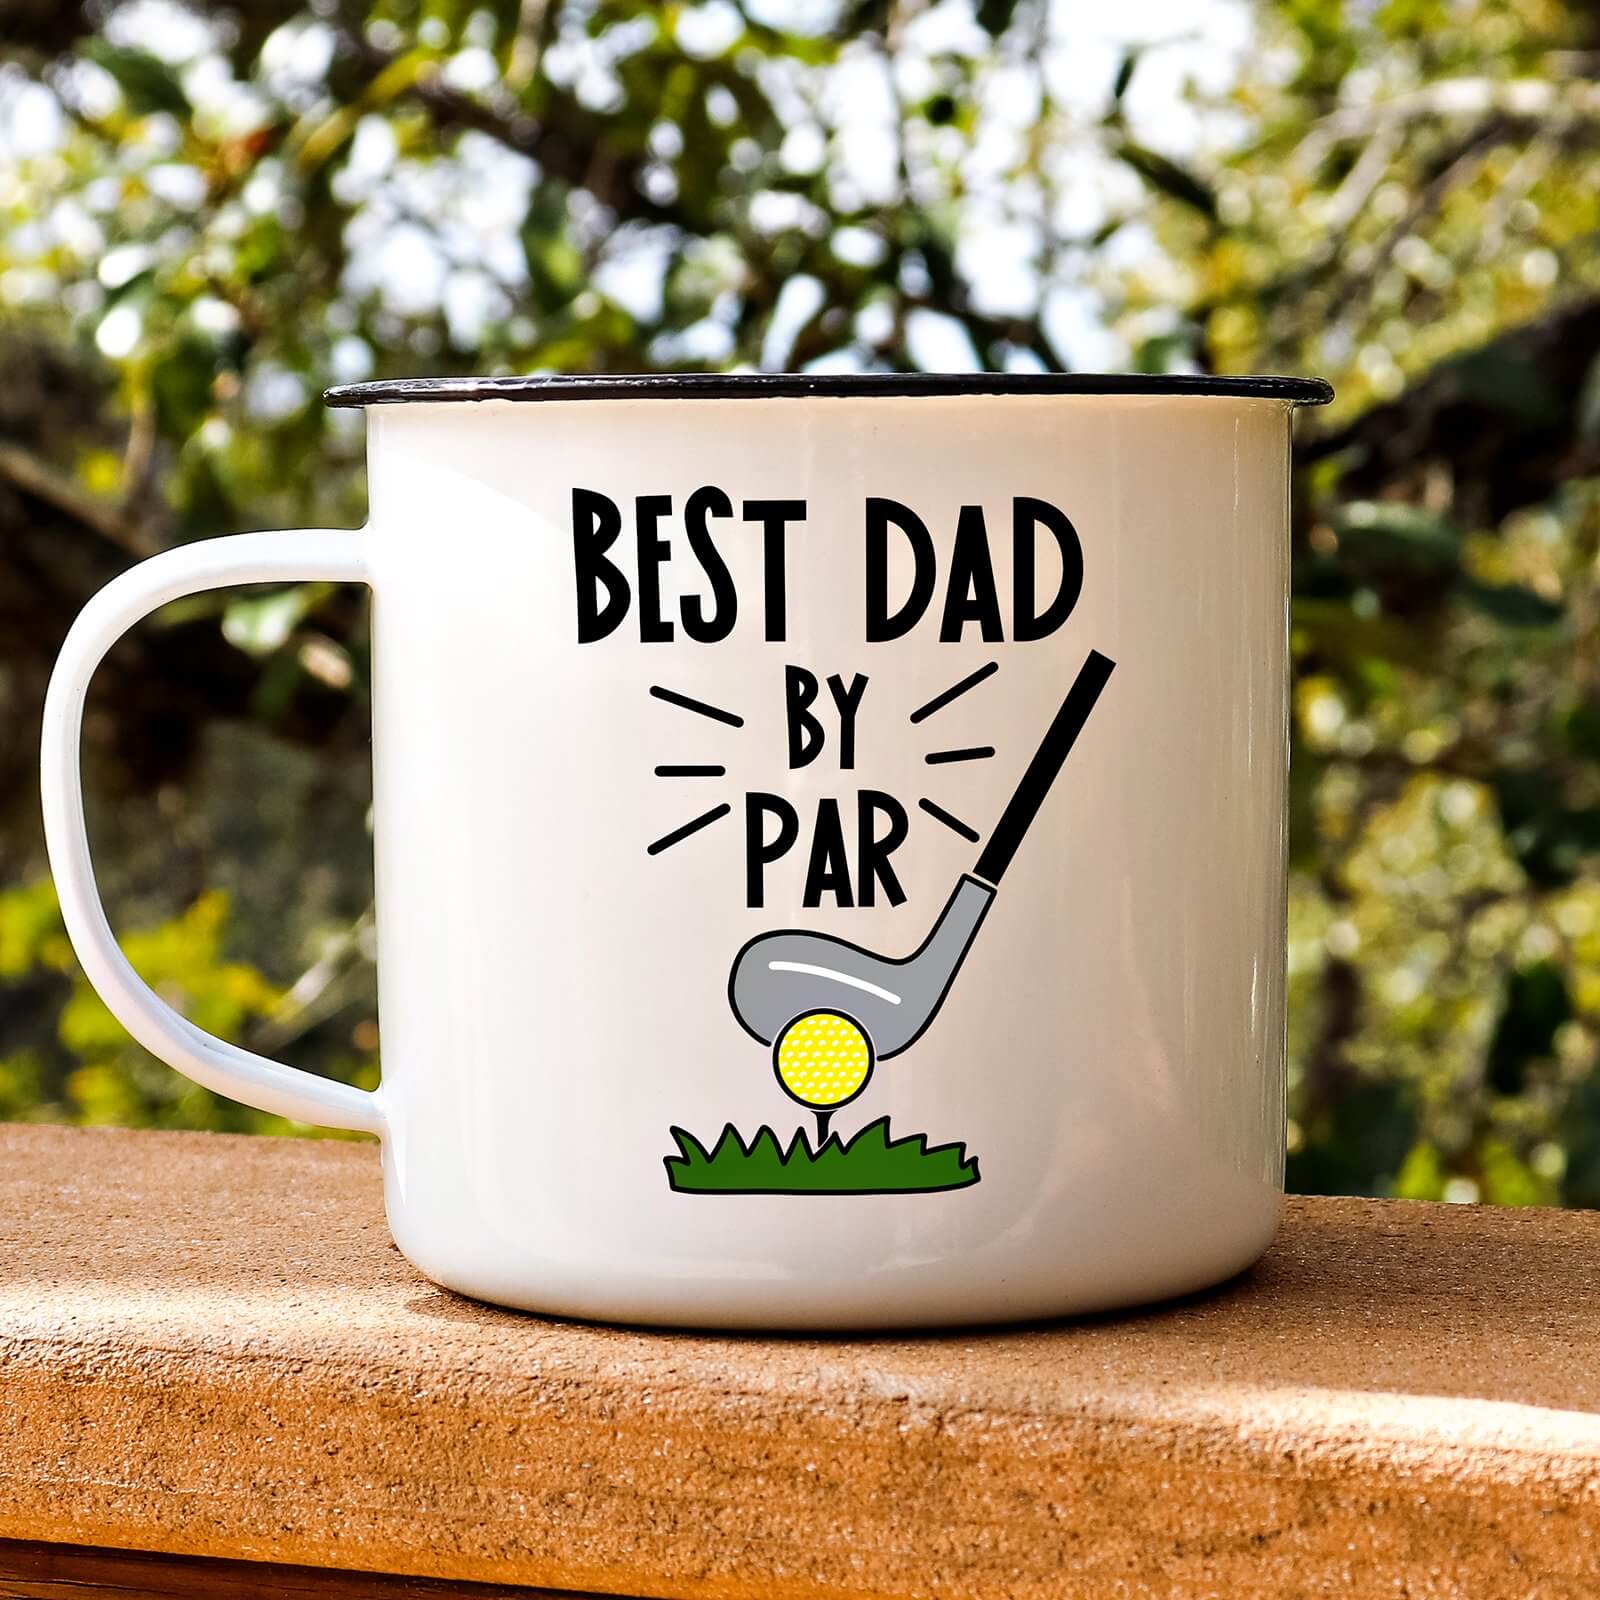 Inscription "Best dad by par" on the cup of tea.